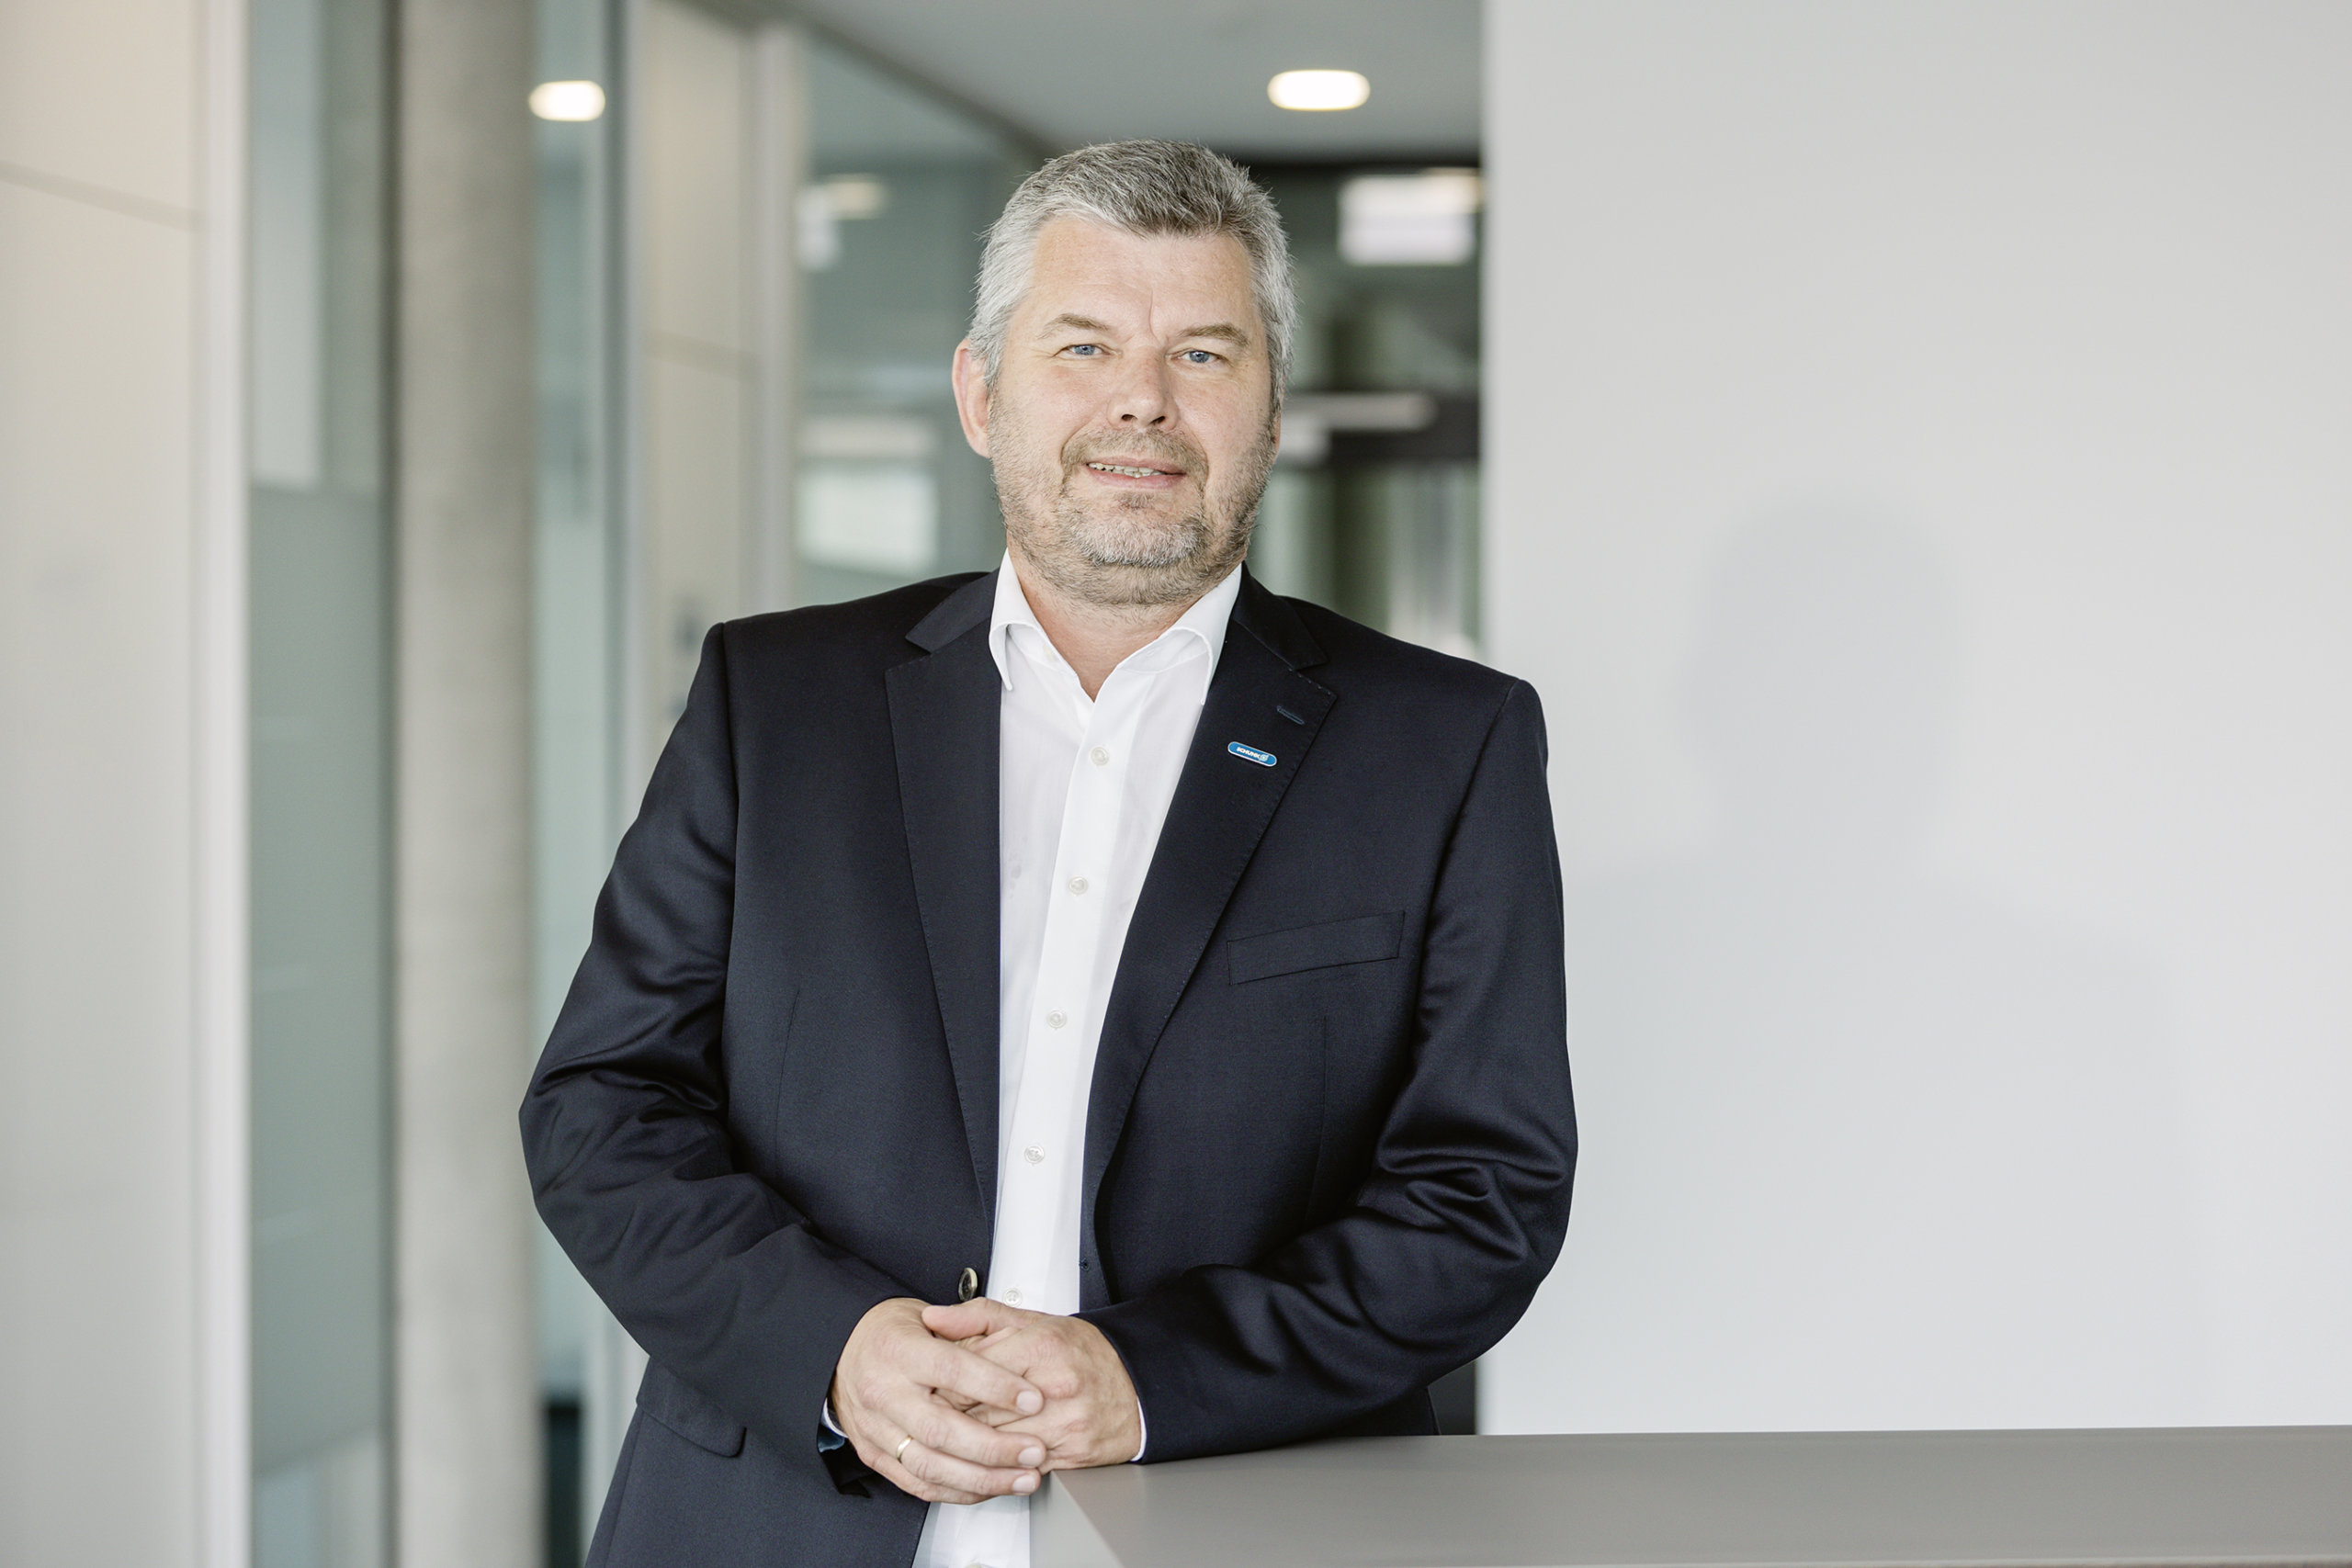 Jochen Ehmer, Executive Vice President Clamping Technology at Schunk GmbH & Co. KG, Lauffen/Neckar, Photo Schunck